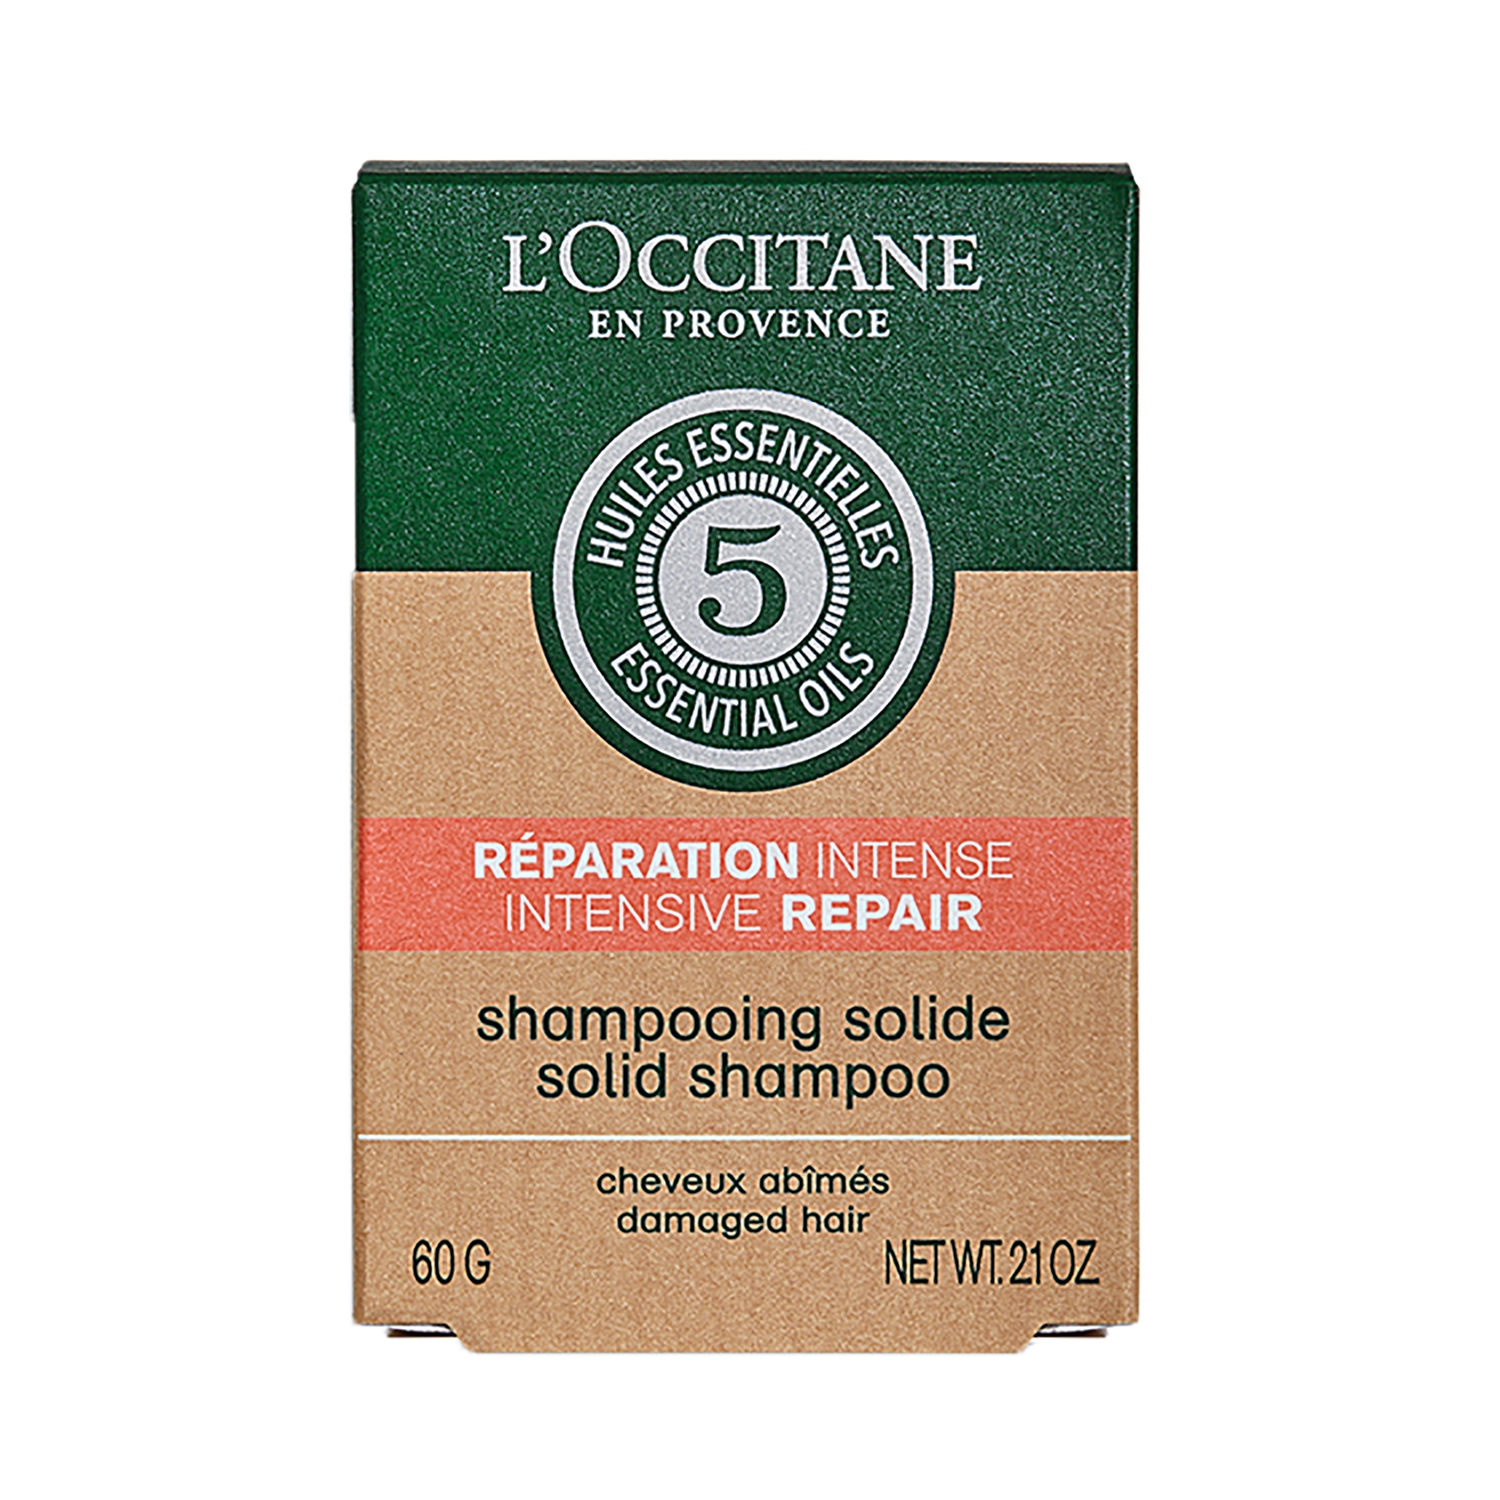 L'occitane | L'occitane Intensive Repair Solid Shampoo (60g)